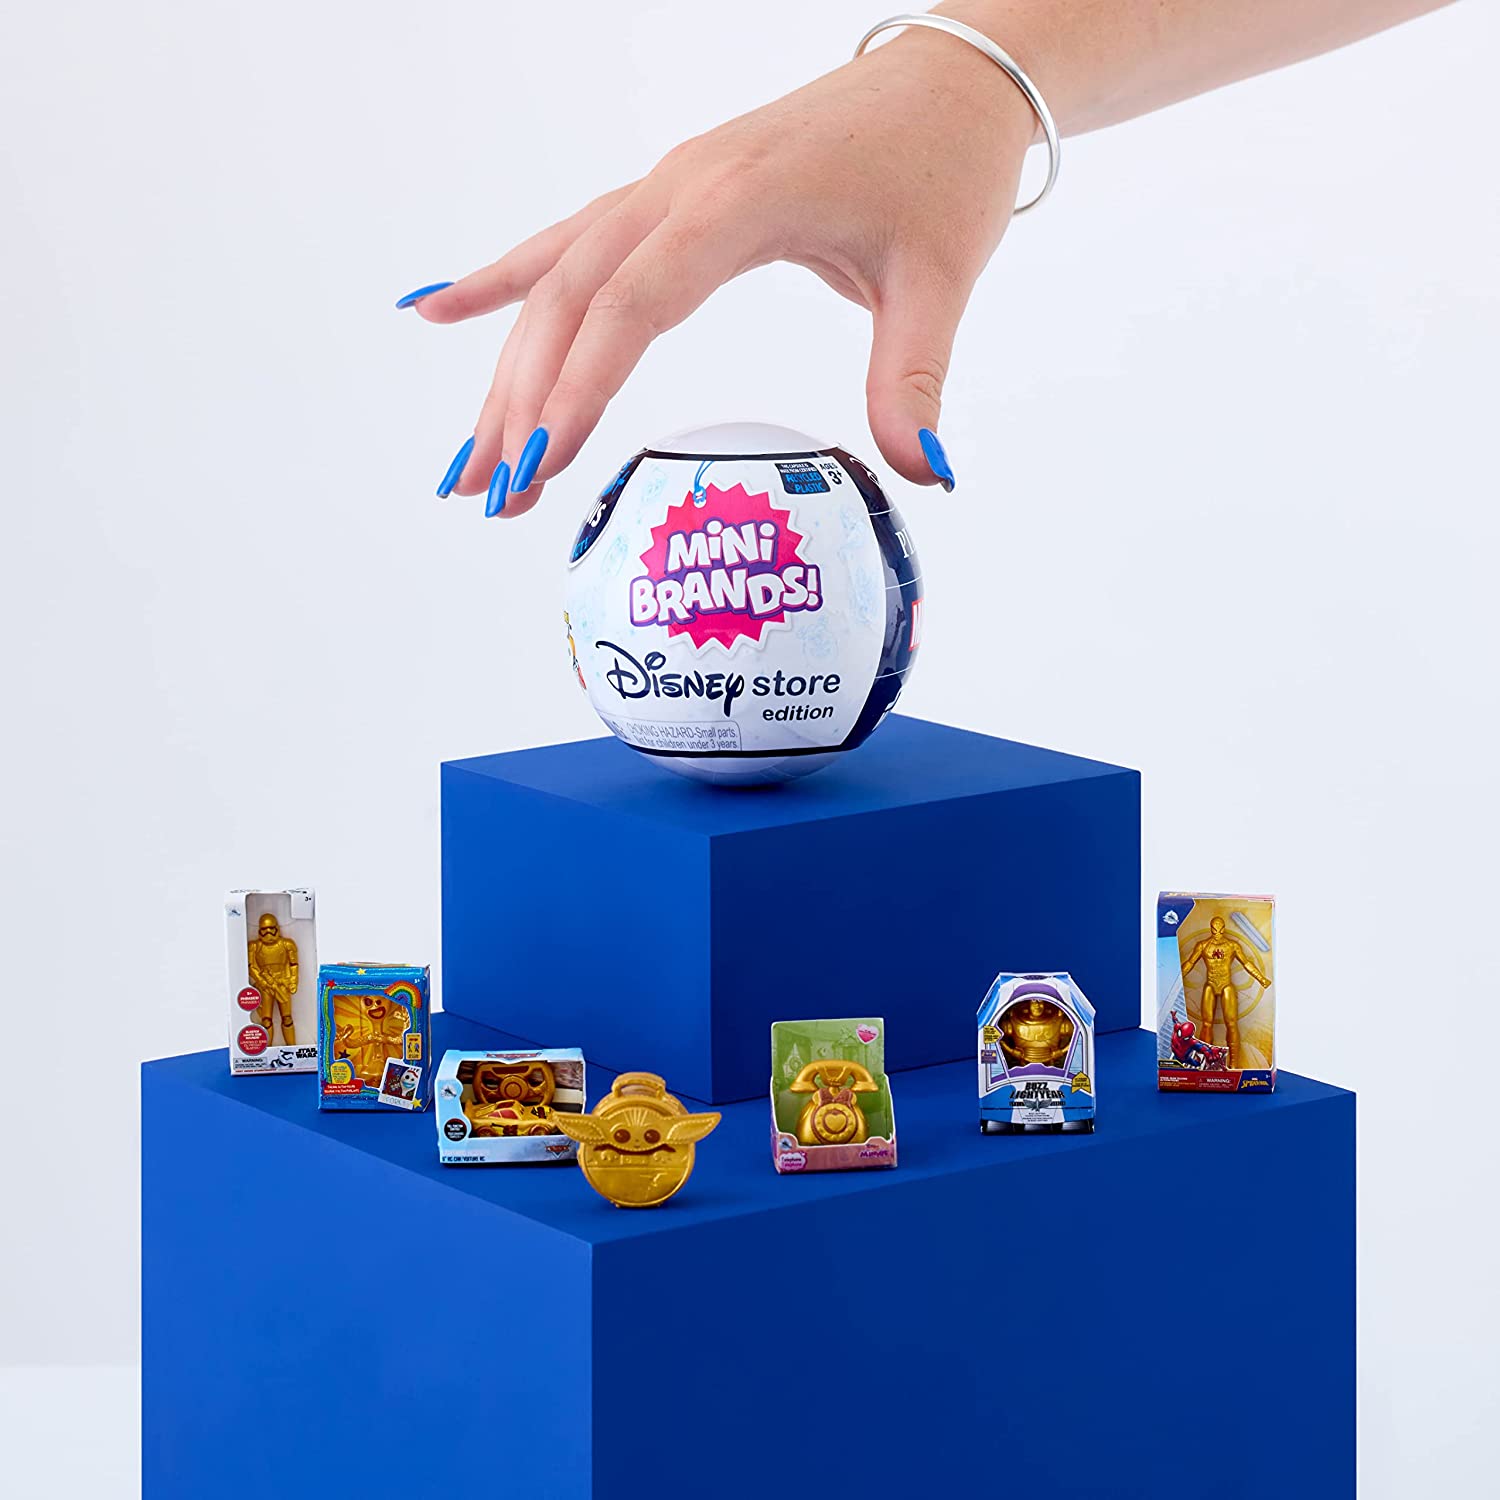 5 Surprise Disney Mini Brands Toys